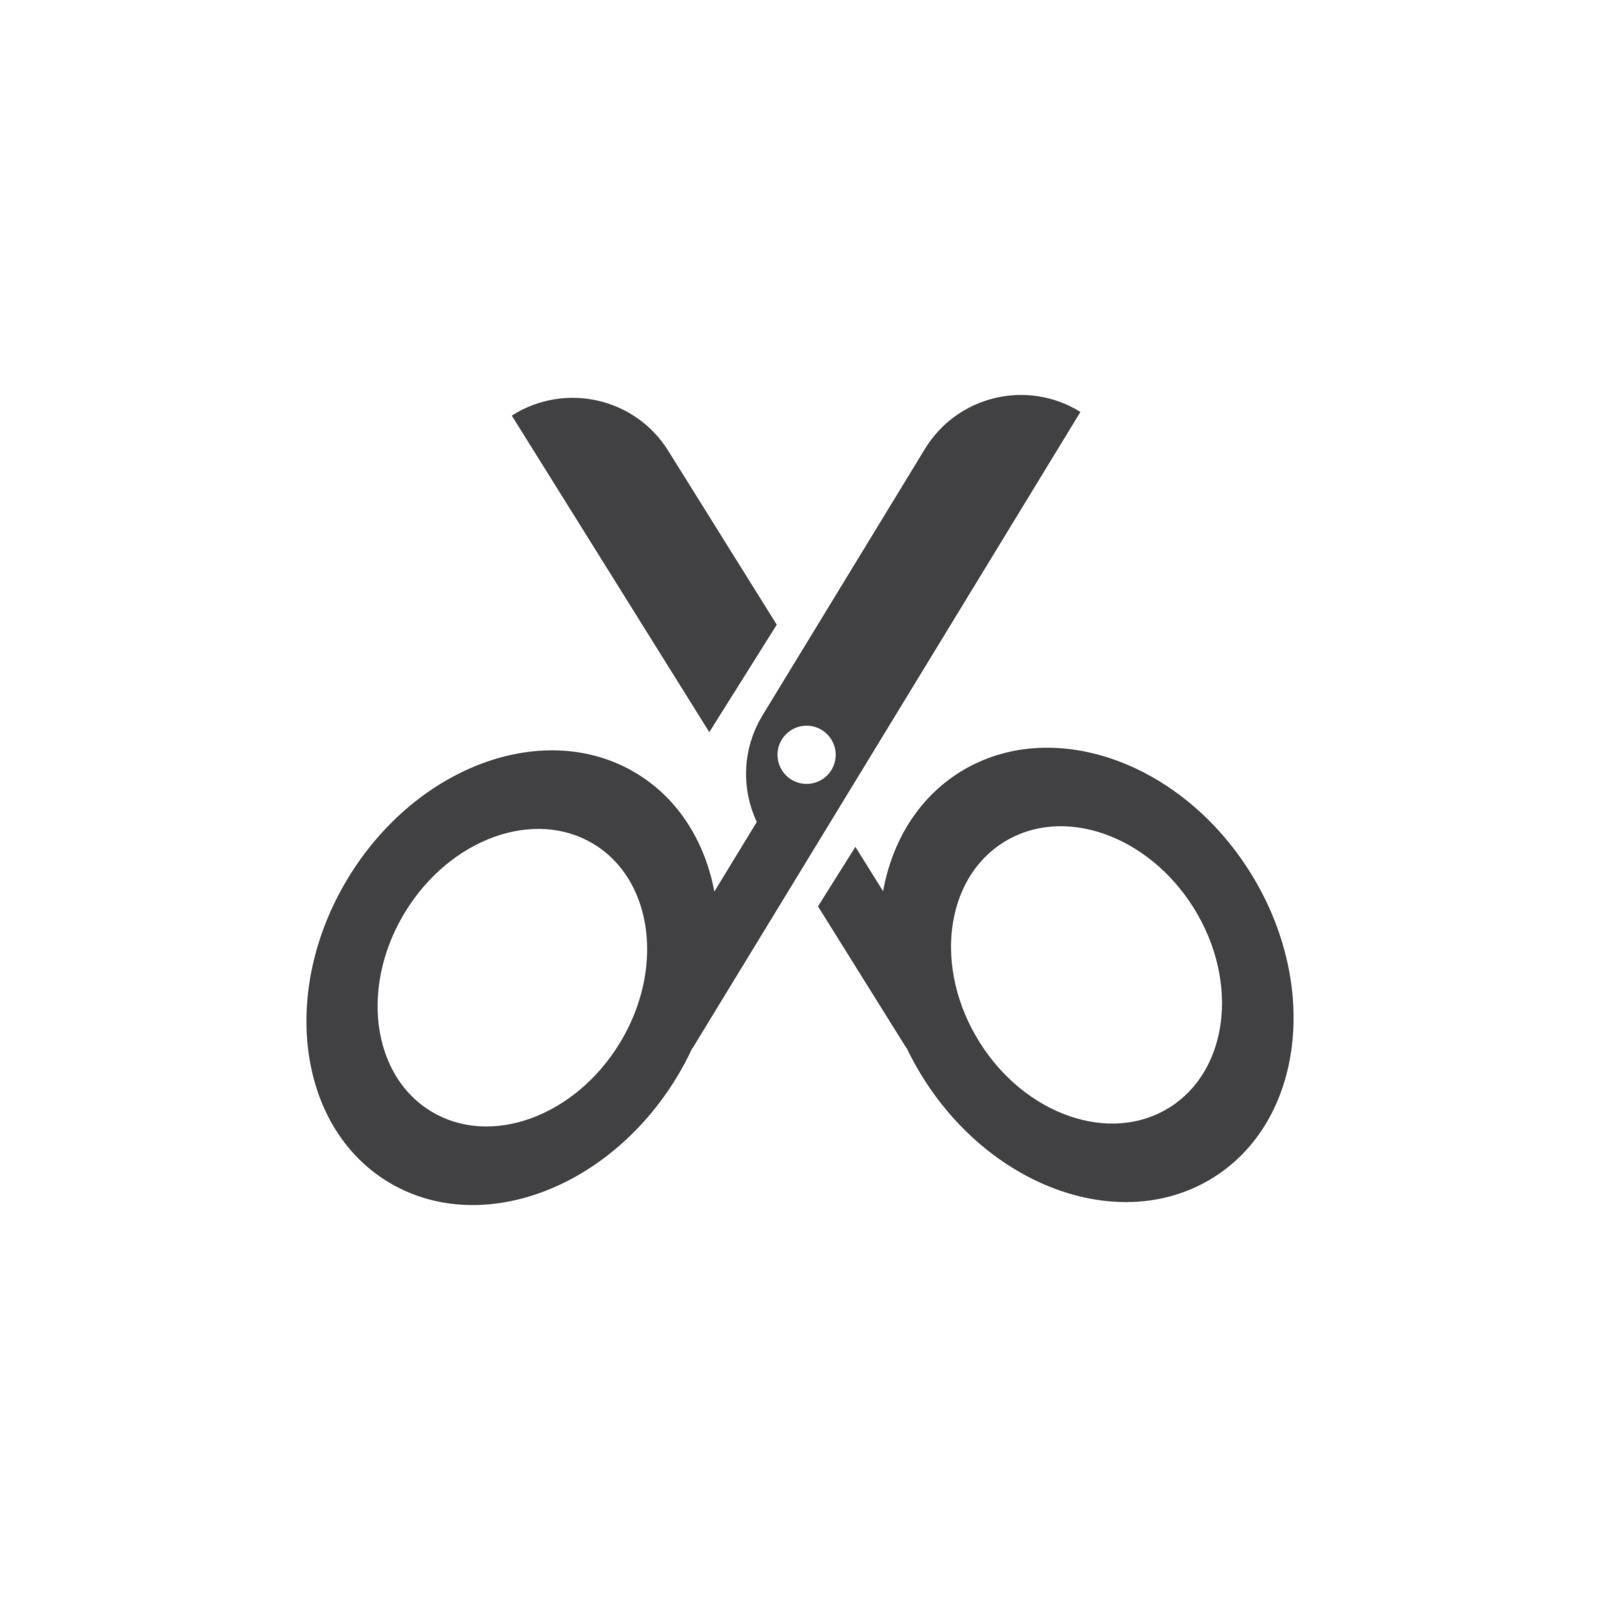 cut symbol icon vector by iconmama